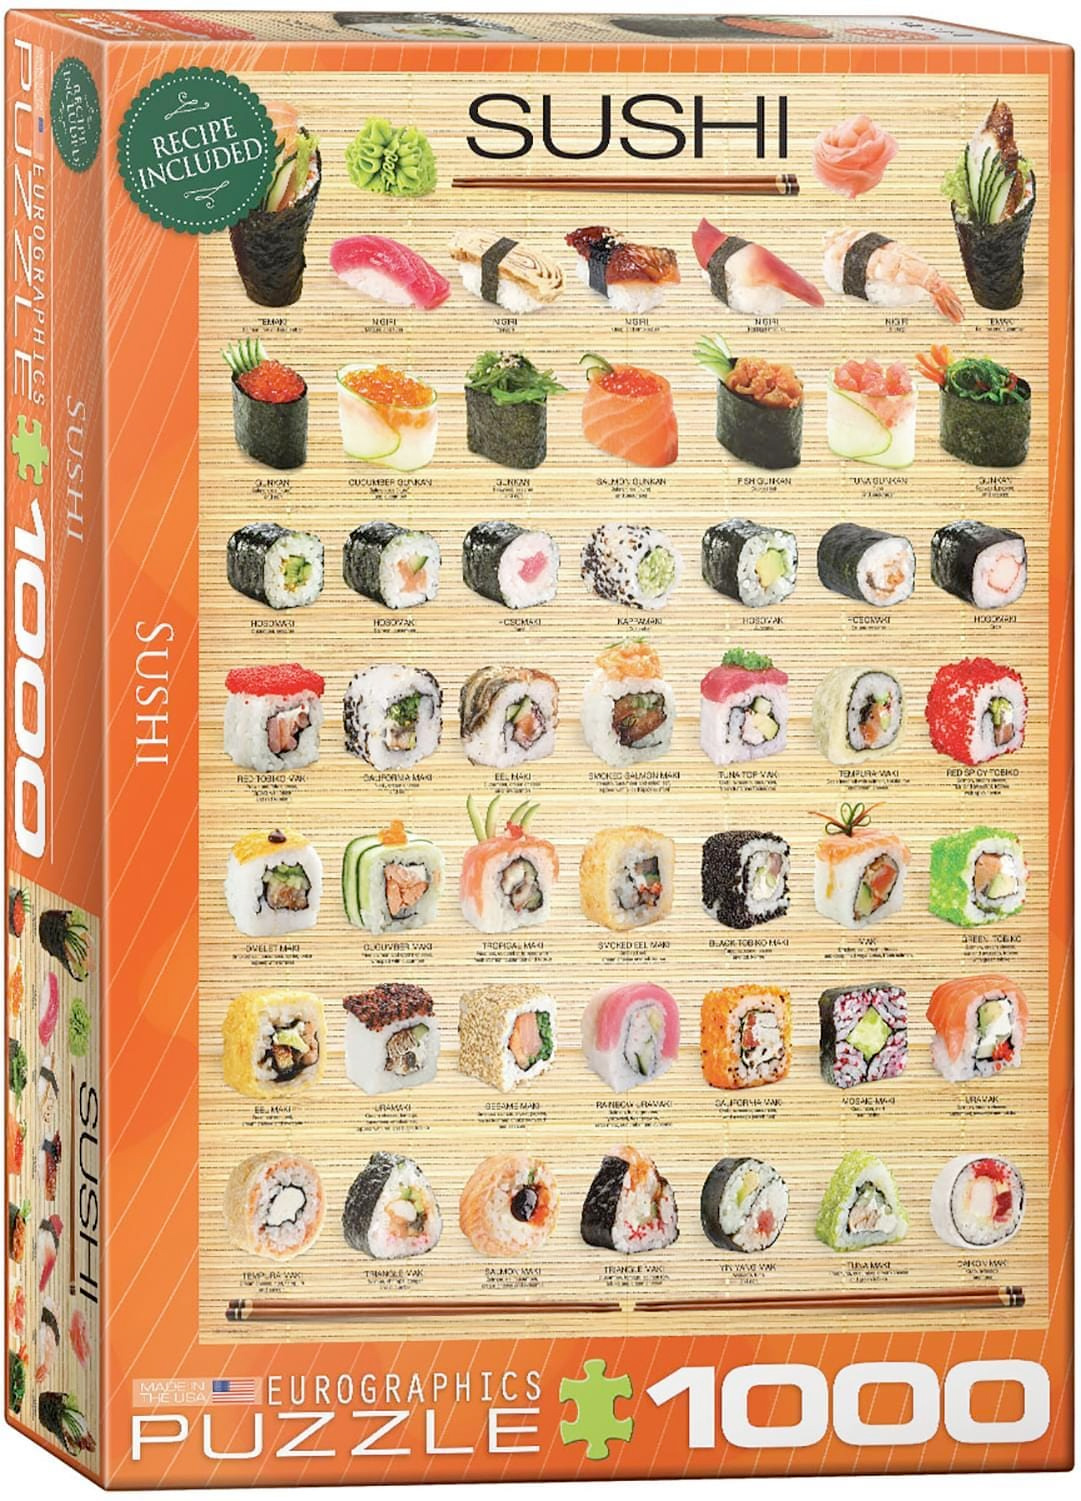 Sushi 1000 Piece Jigsaw Puzzle